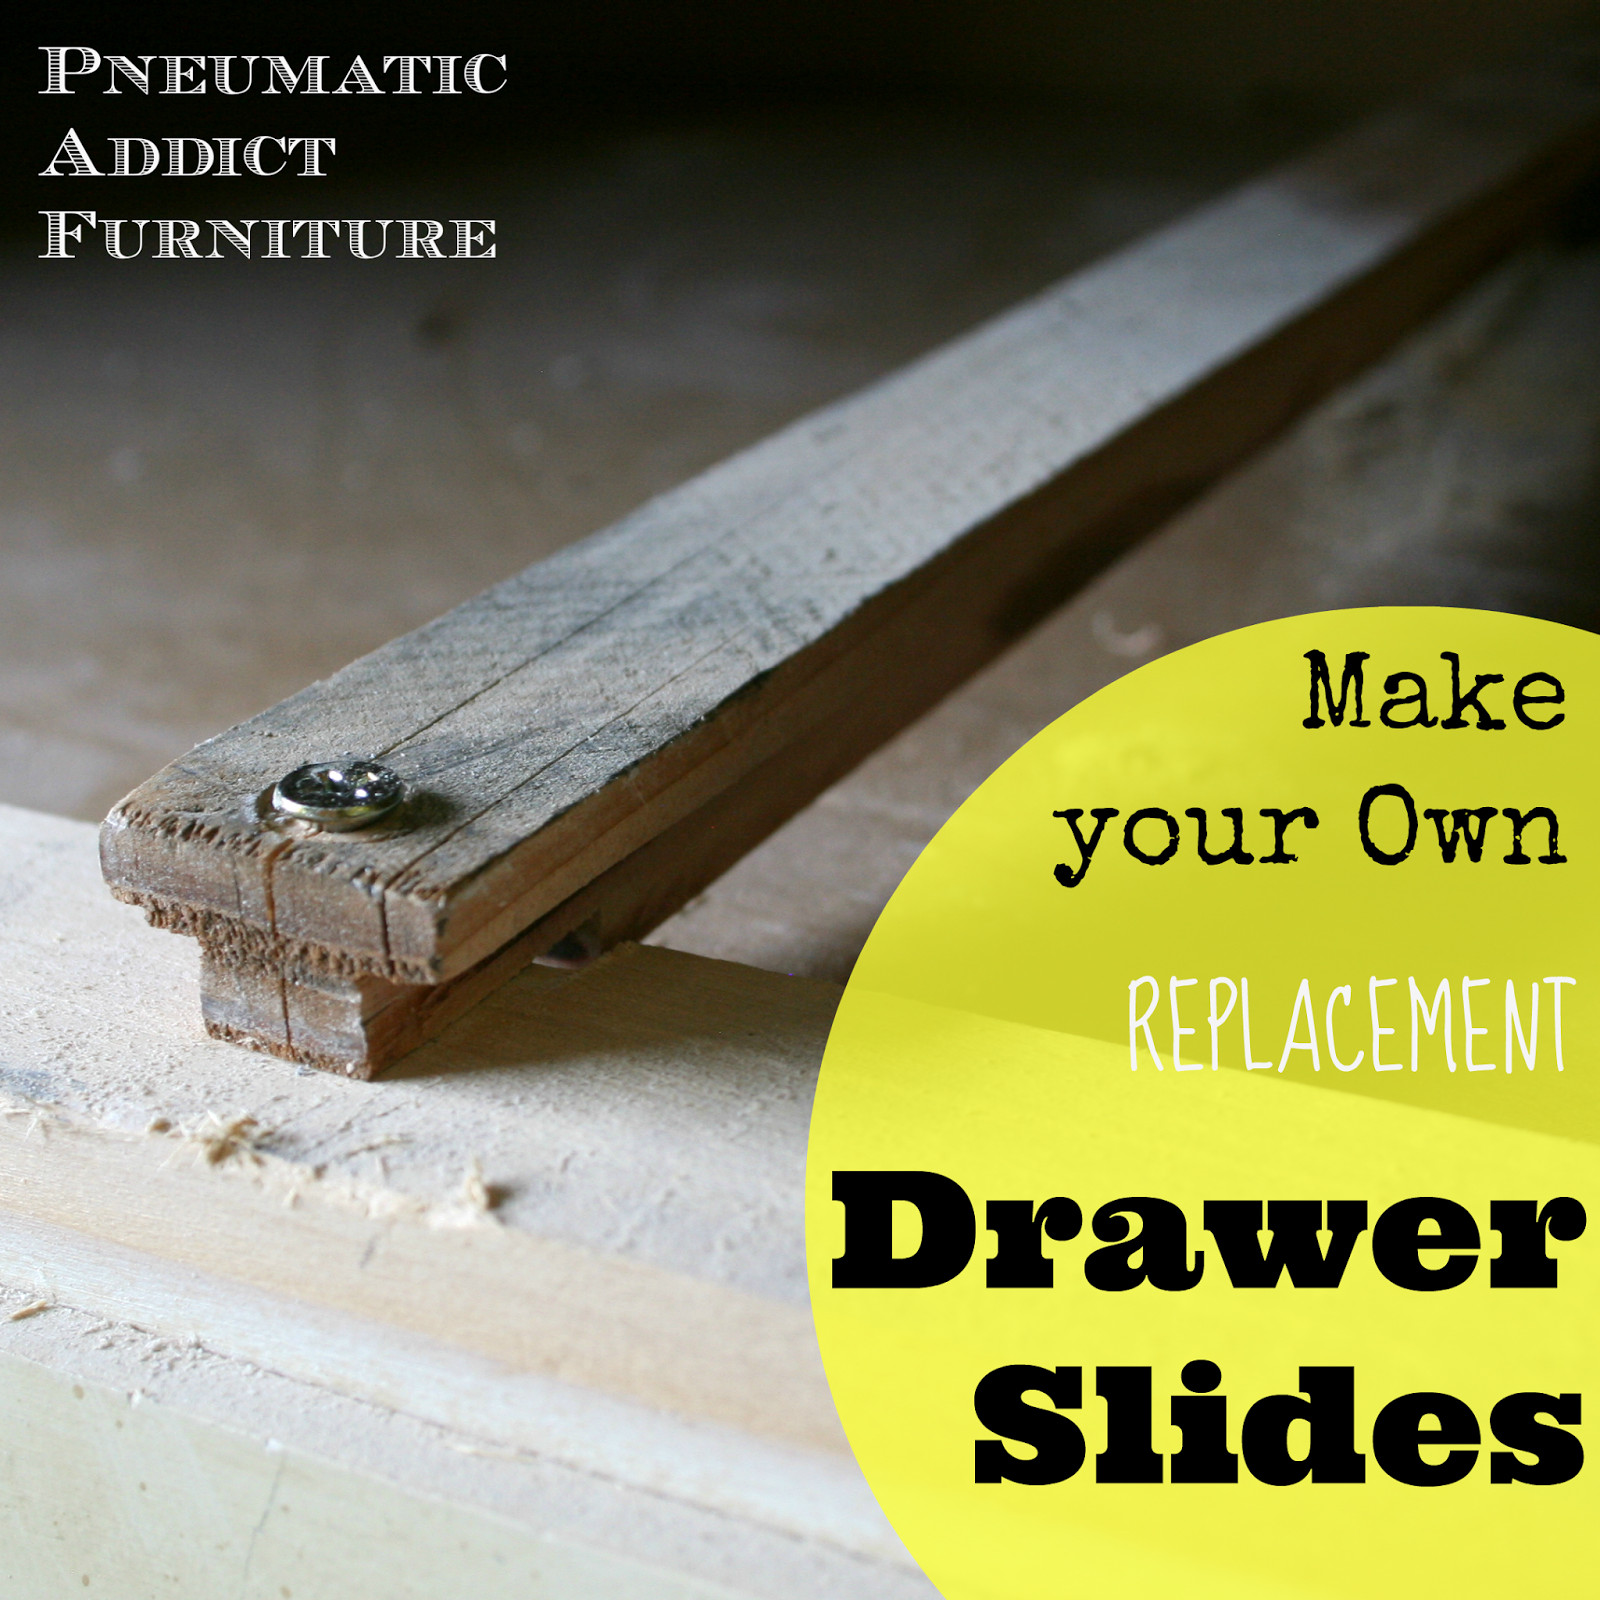 DIY Wooden Drawer Slides
 How to Build Your Own Drawer Slides